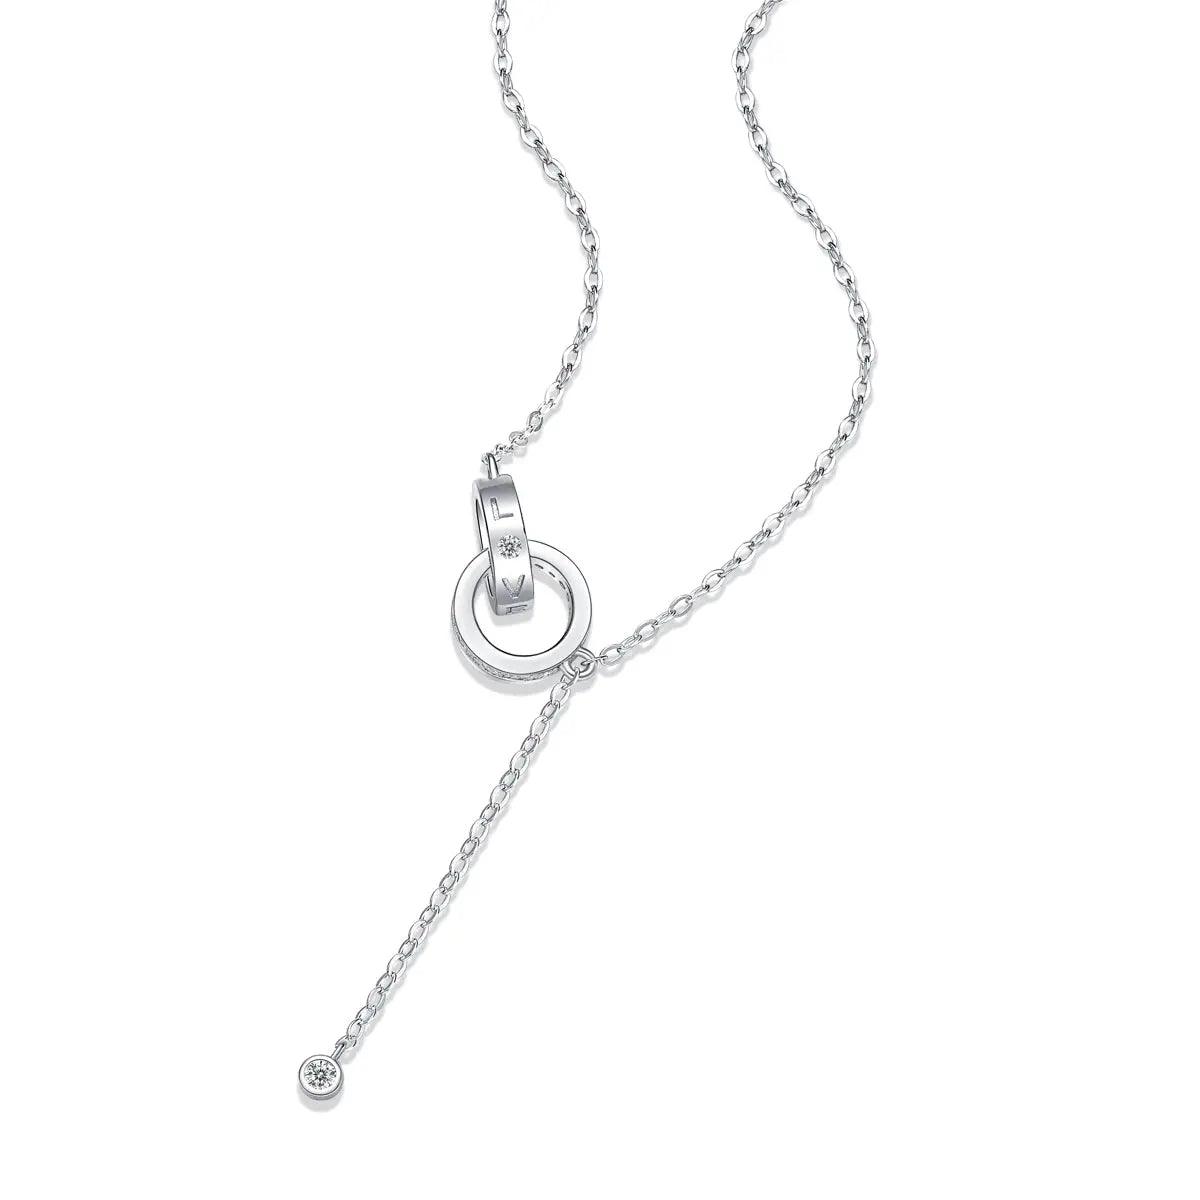 FairyLocus “Interlocking” Moissanite Necklace Sterling Silver 18K White Gold Plated D Color VVS1 Clarity Brilliant Necklace FLZZNLMS17 Fairylocus